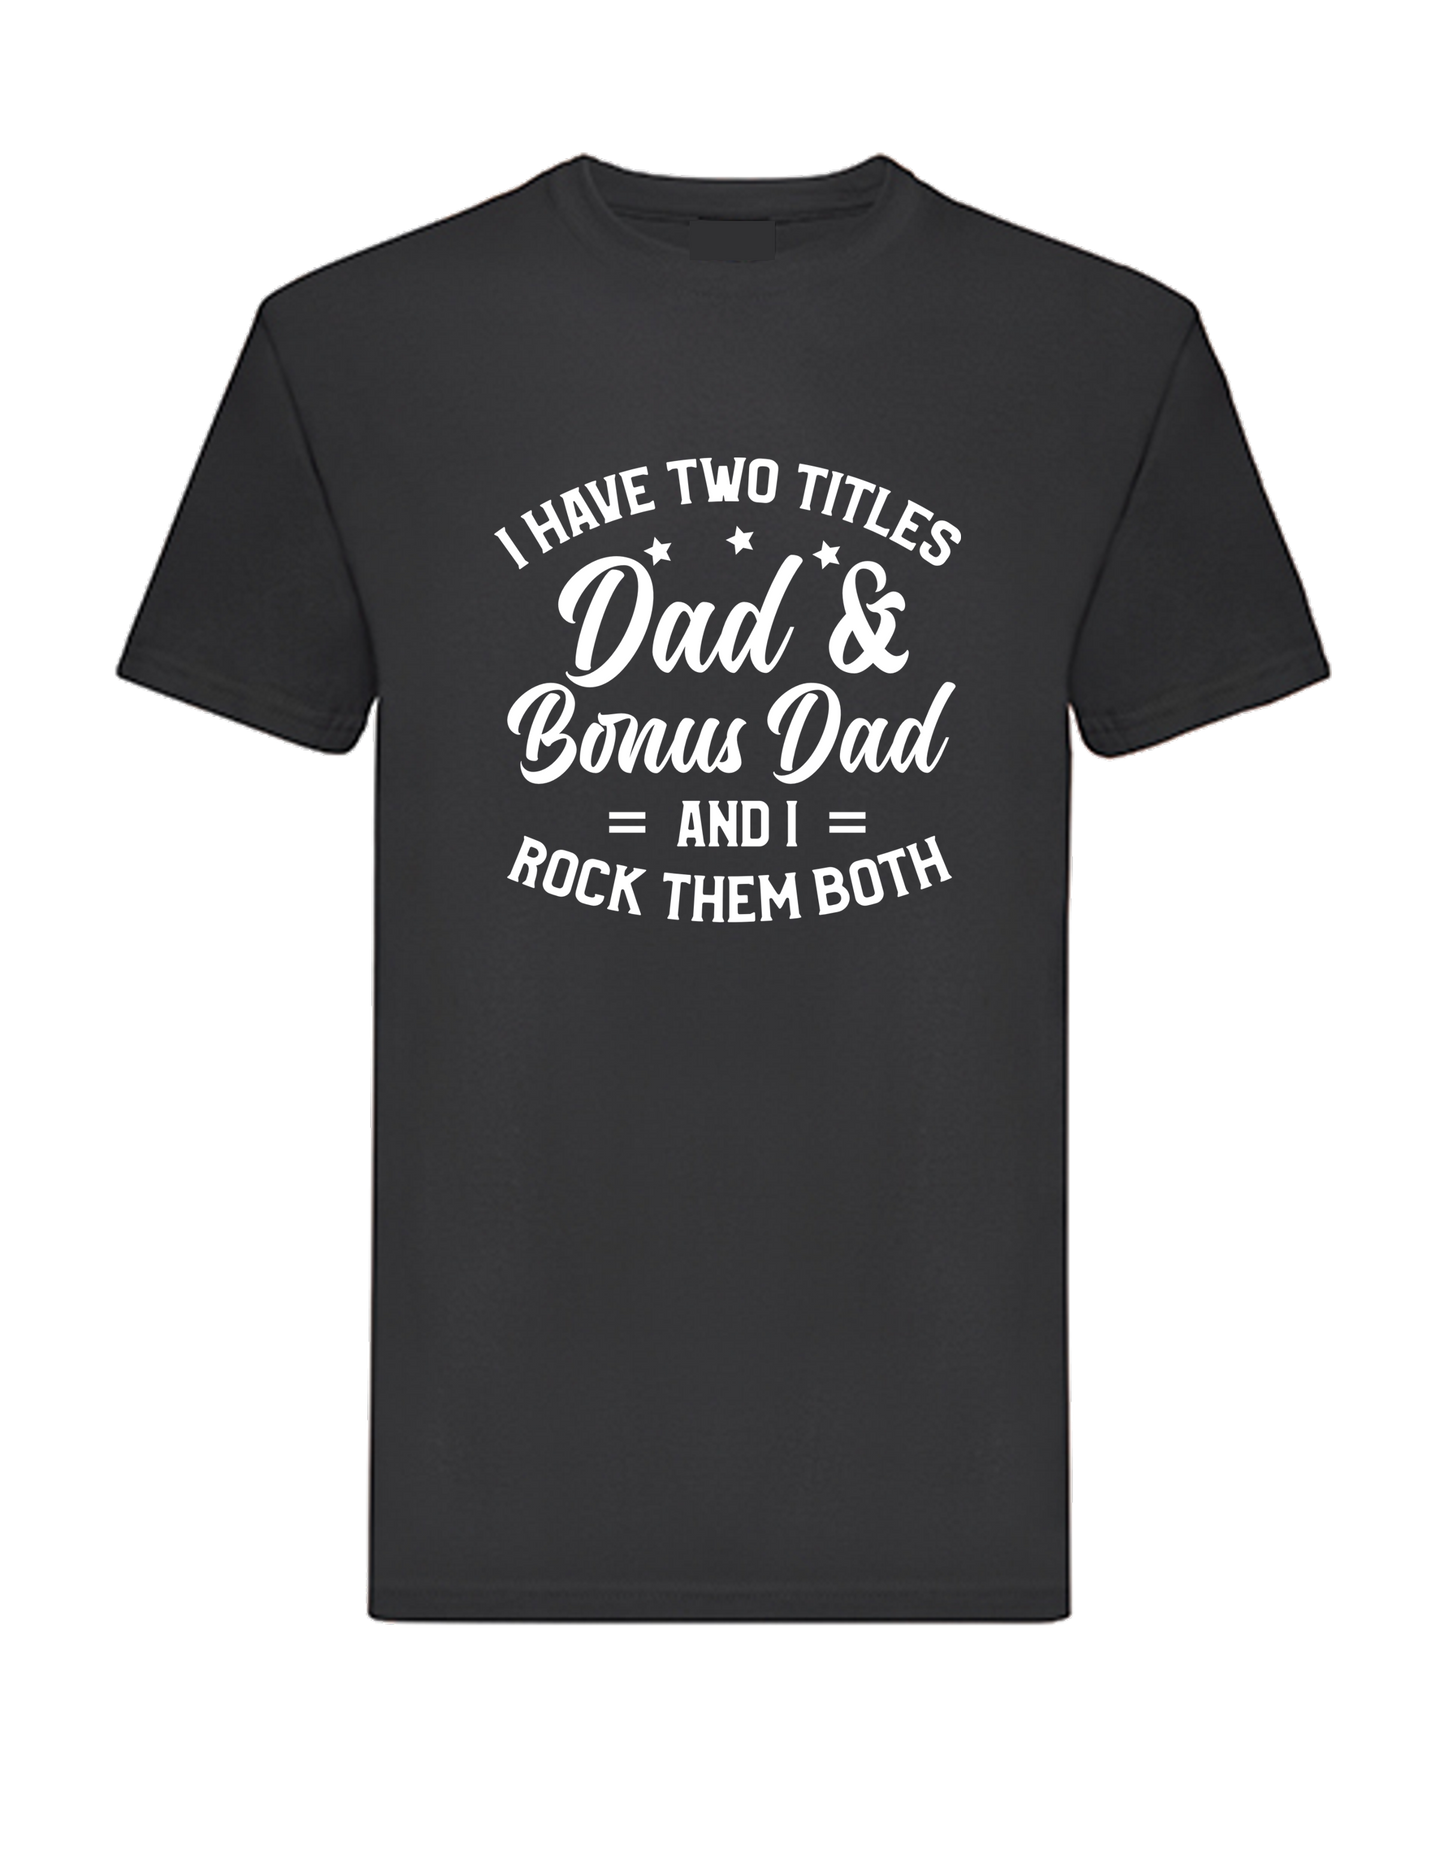 Dad & bonus dad